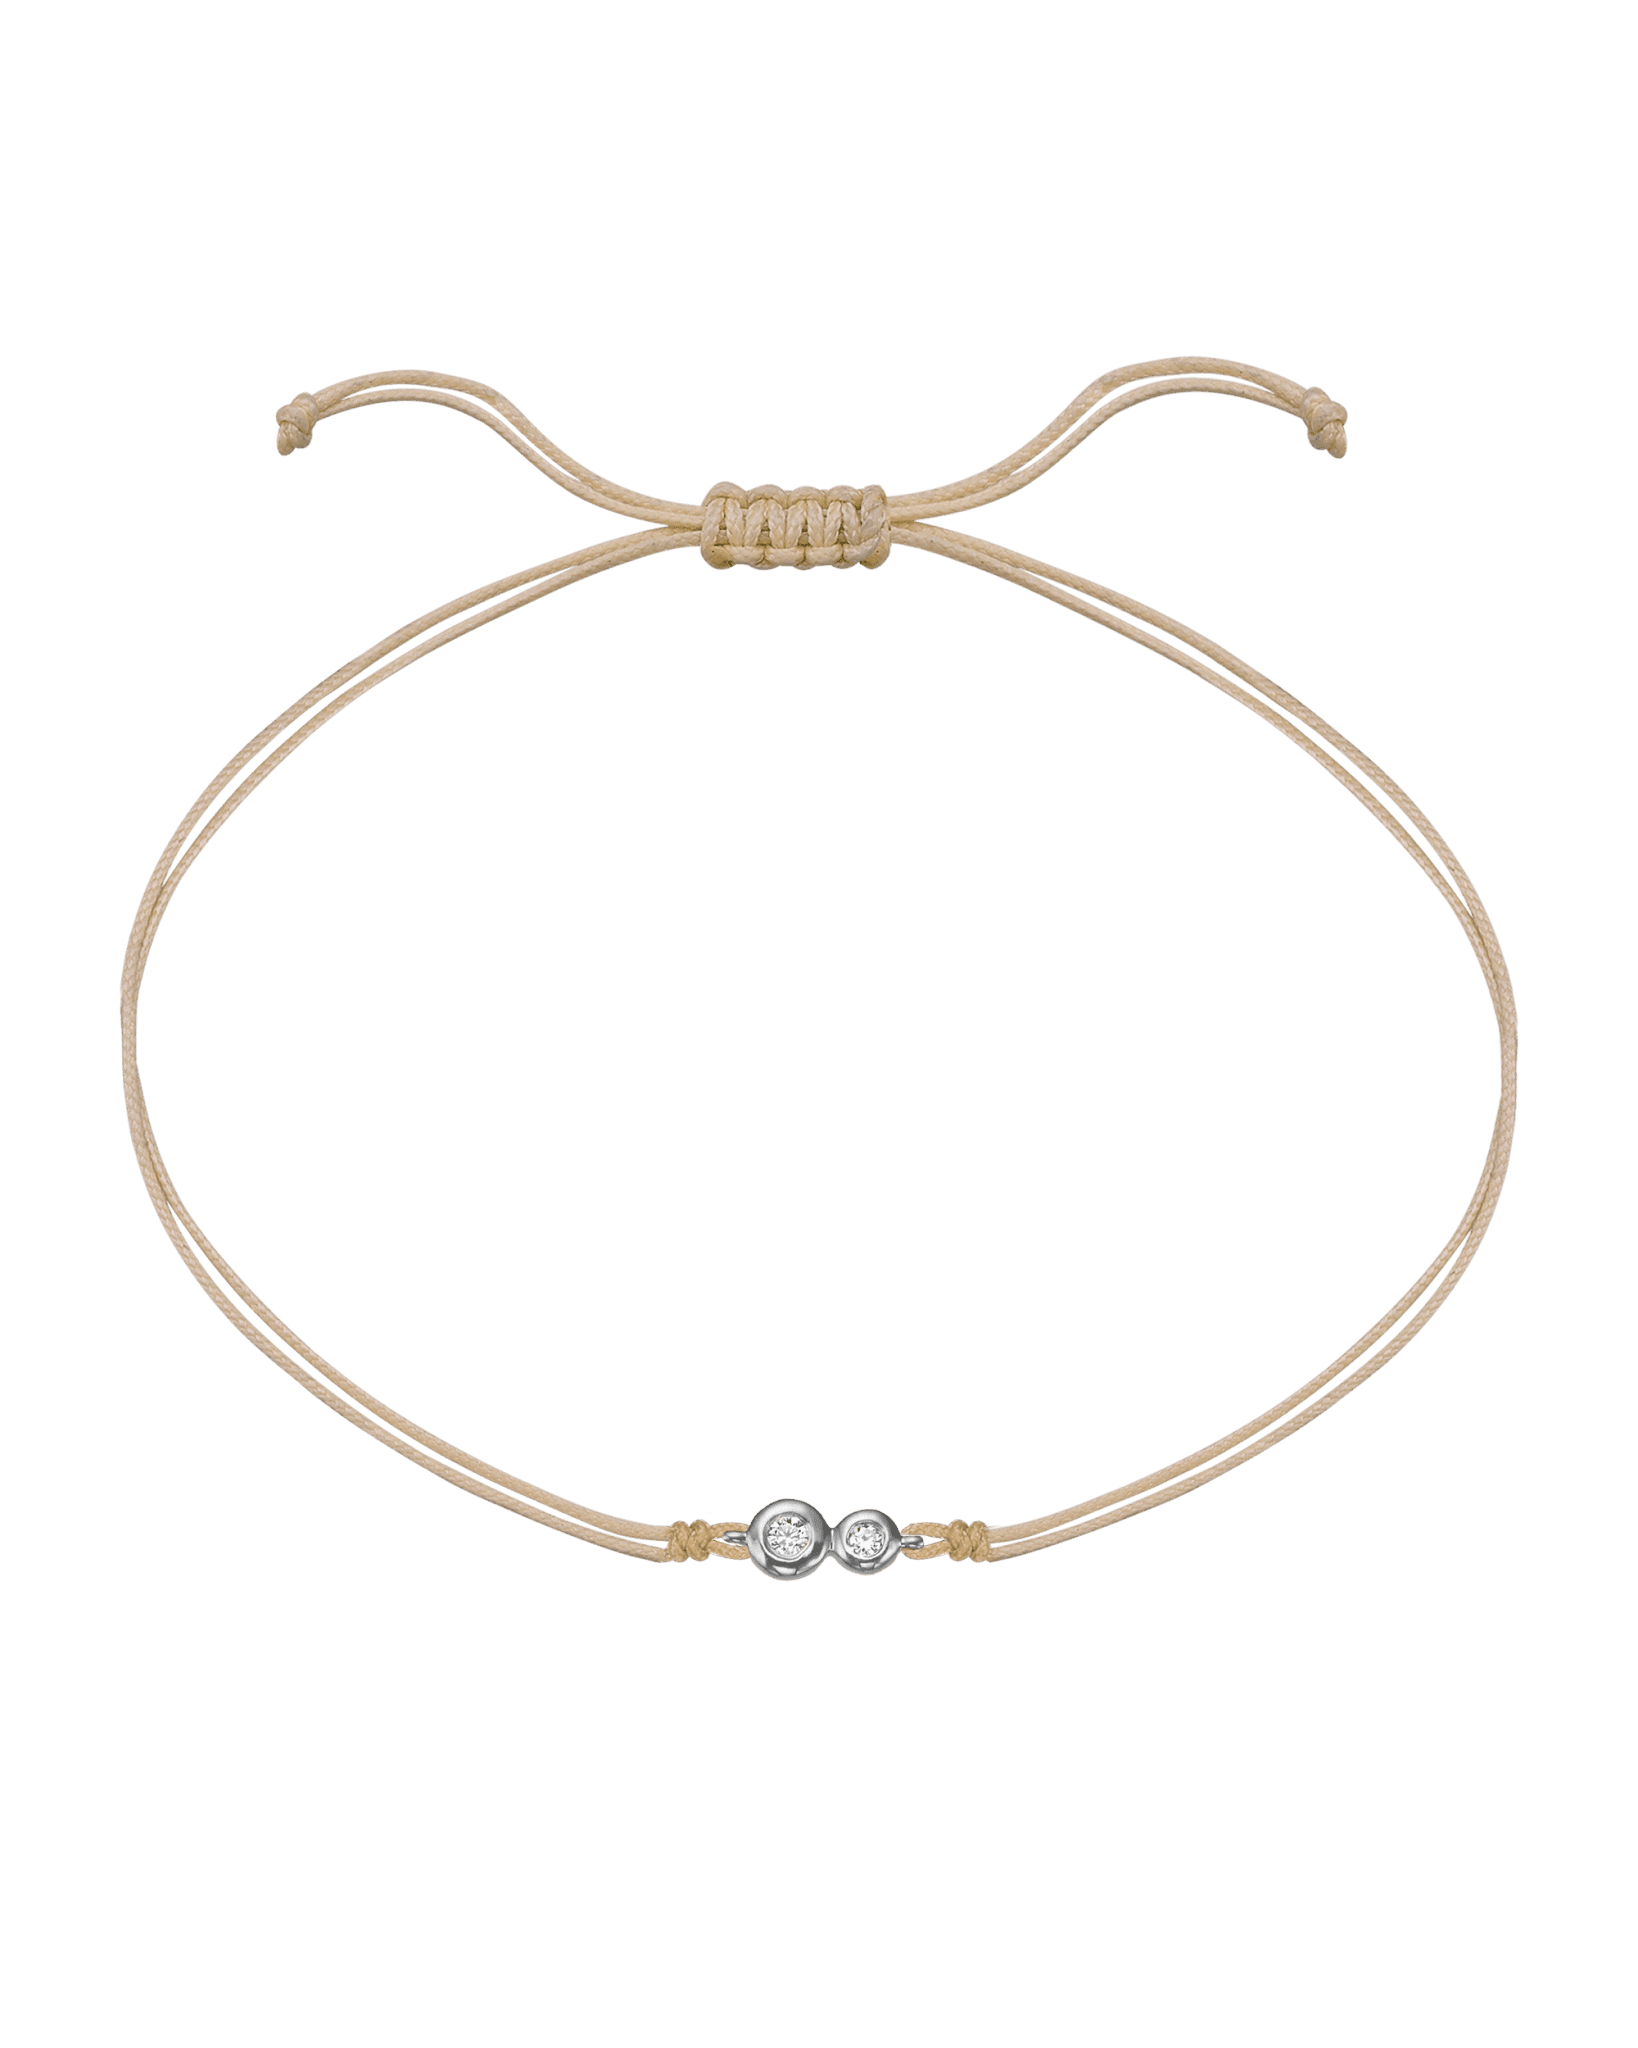 The Two of us Diamond String of love - 14K White Gold Bracelet 14K Solid Gold Beige 